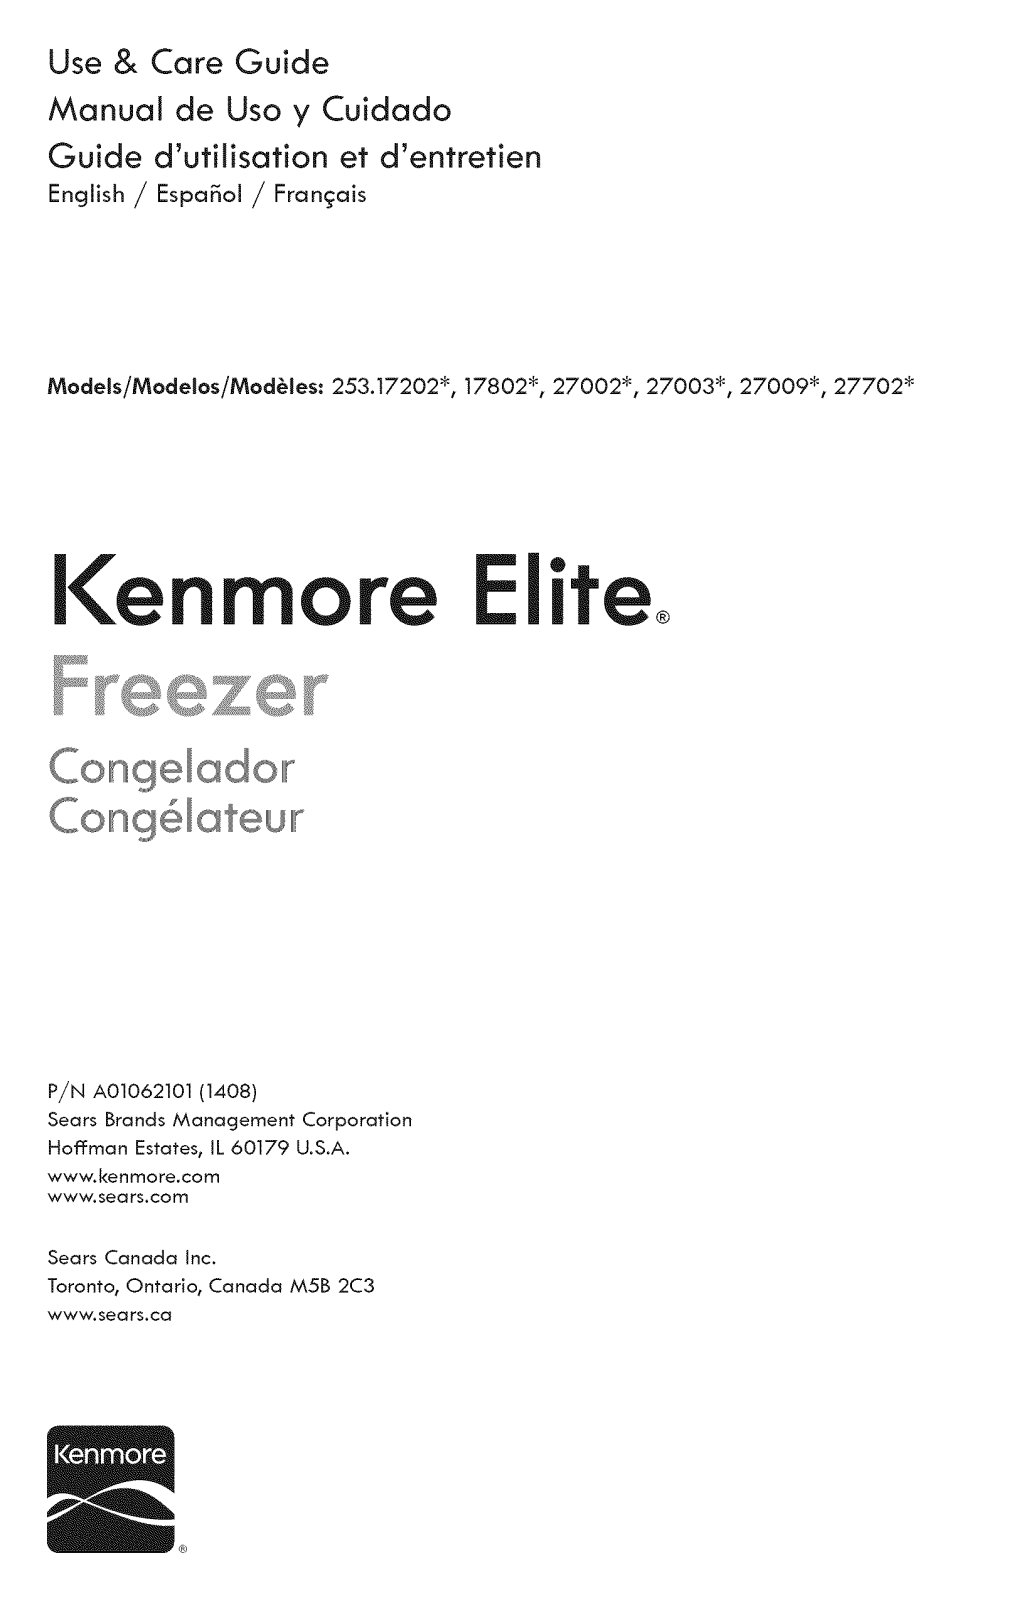 Kenmore Elite 25317202410, 25317202411, 25317202412, 25317202413, 25327002410 Owner’s Manual